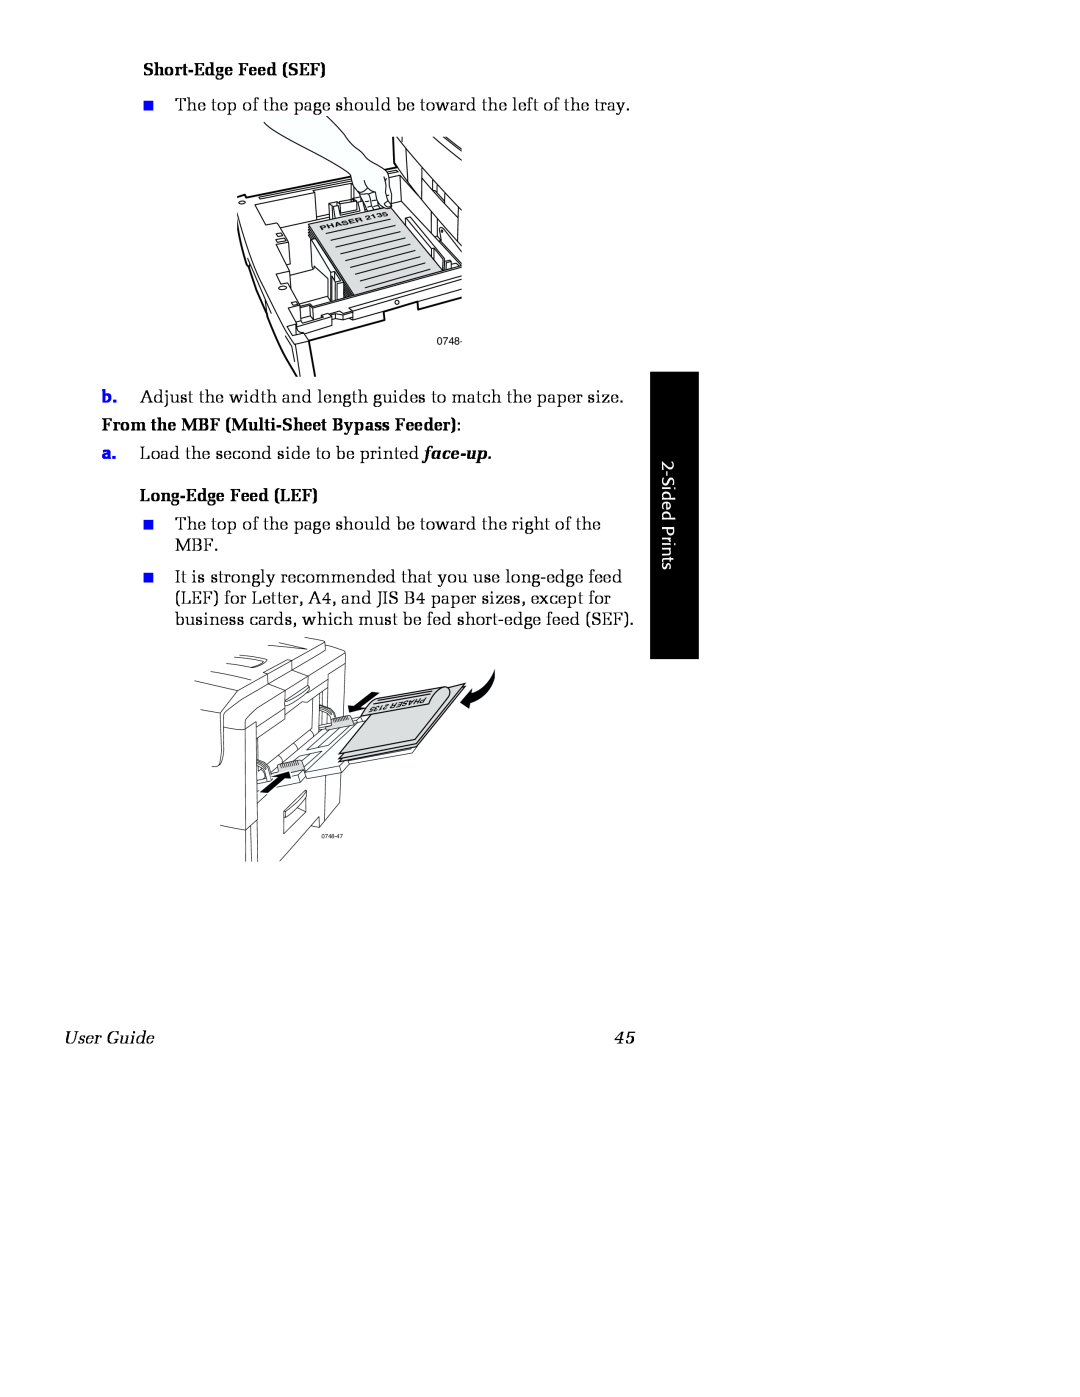 Xerox Phaser 2135 manual Short-Edge Feed SEF, Long-Edge Feed LEF, Sided Prints, User Guide, PHASER 2135 